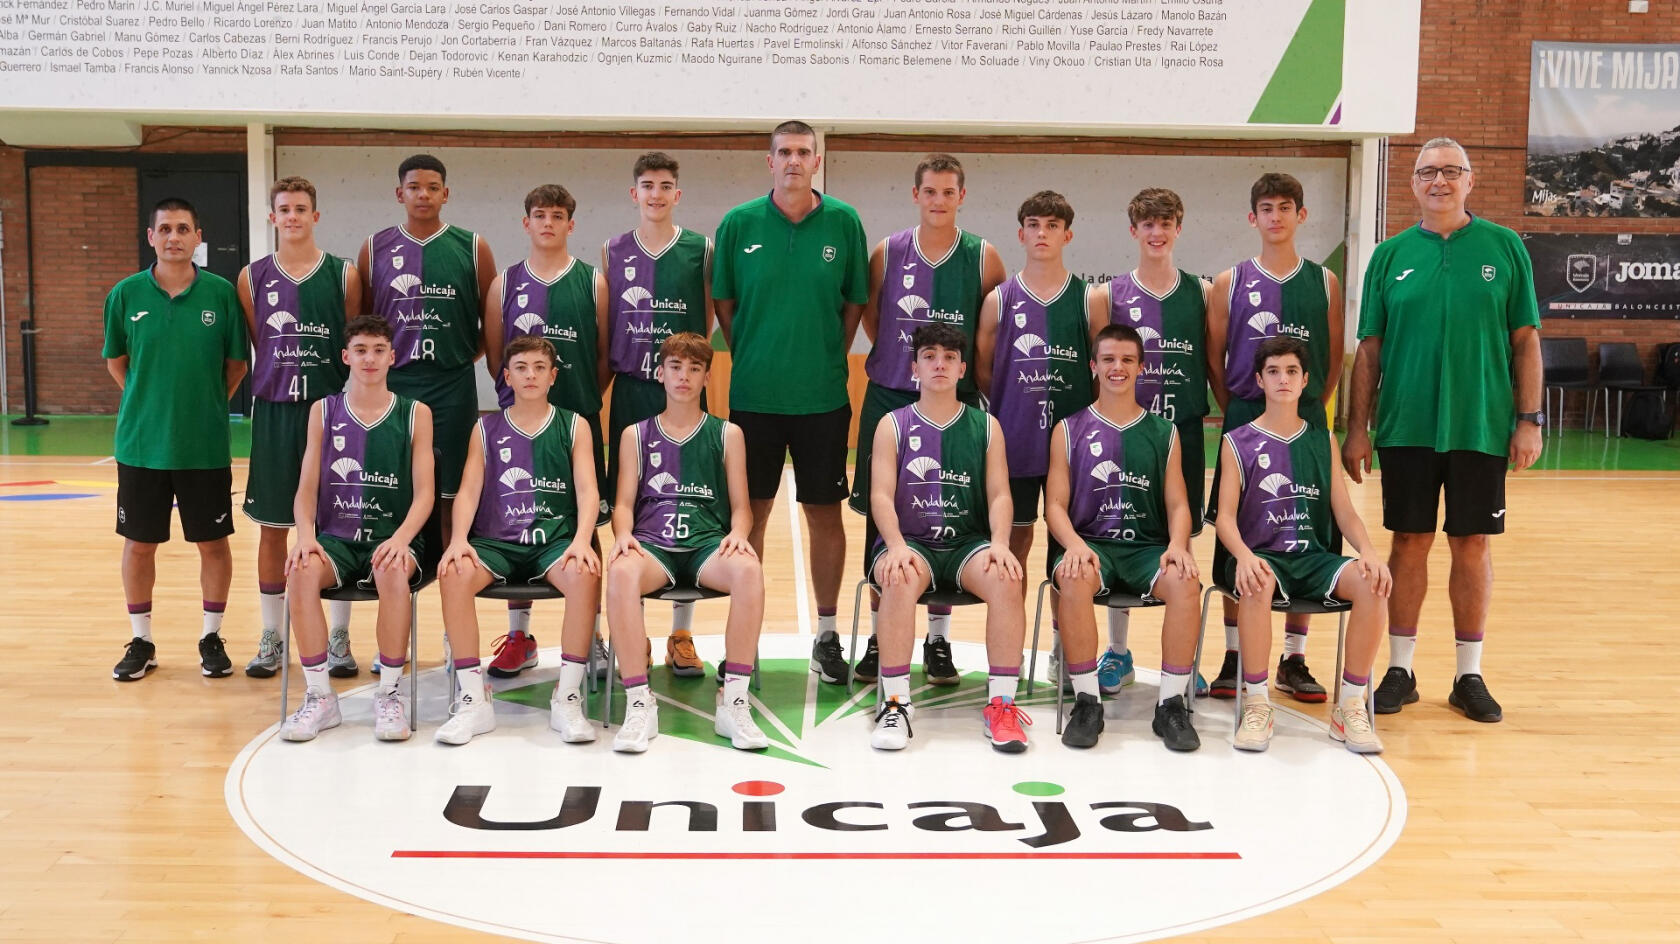 U14 Unicaja Andalucía men's team participates in the Spanish Championships